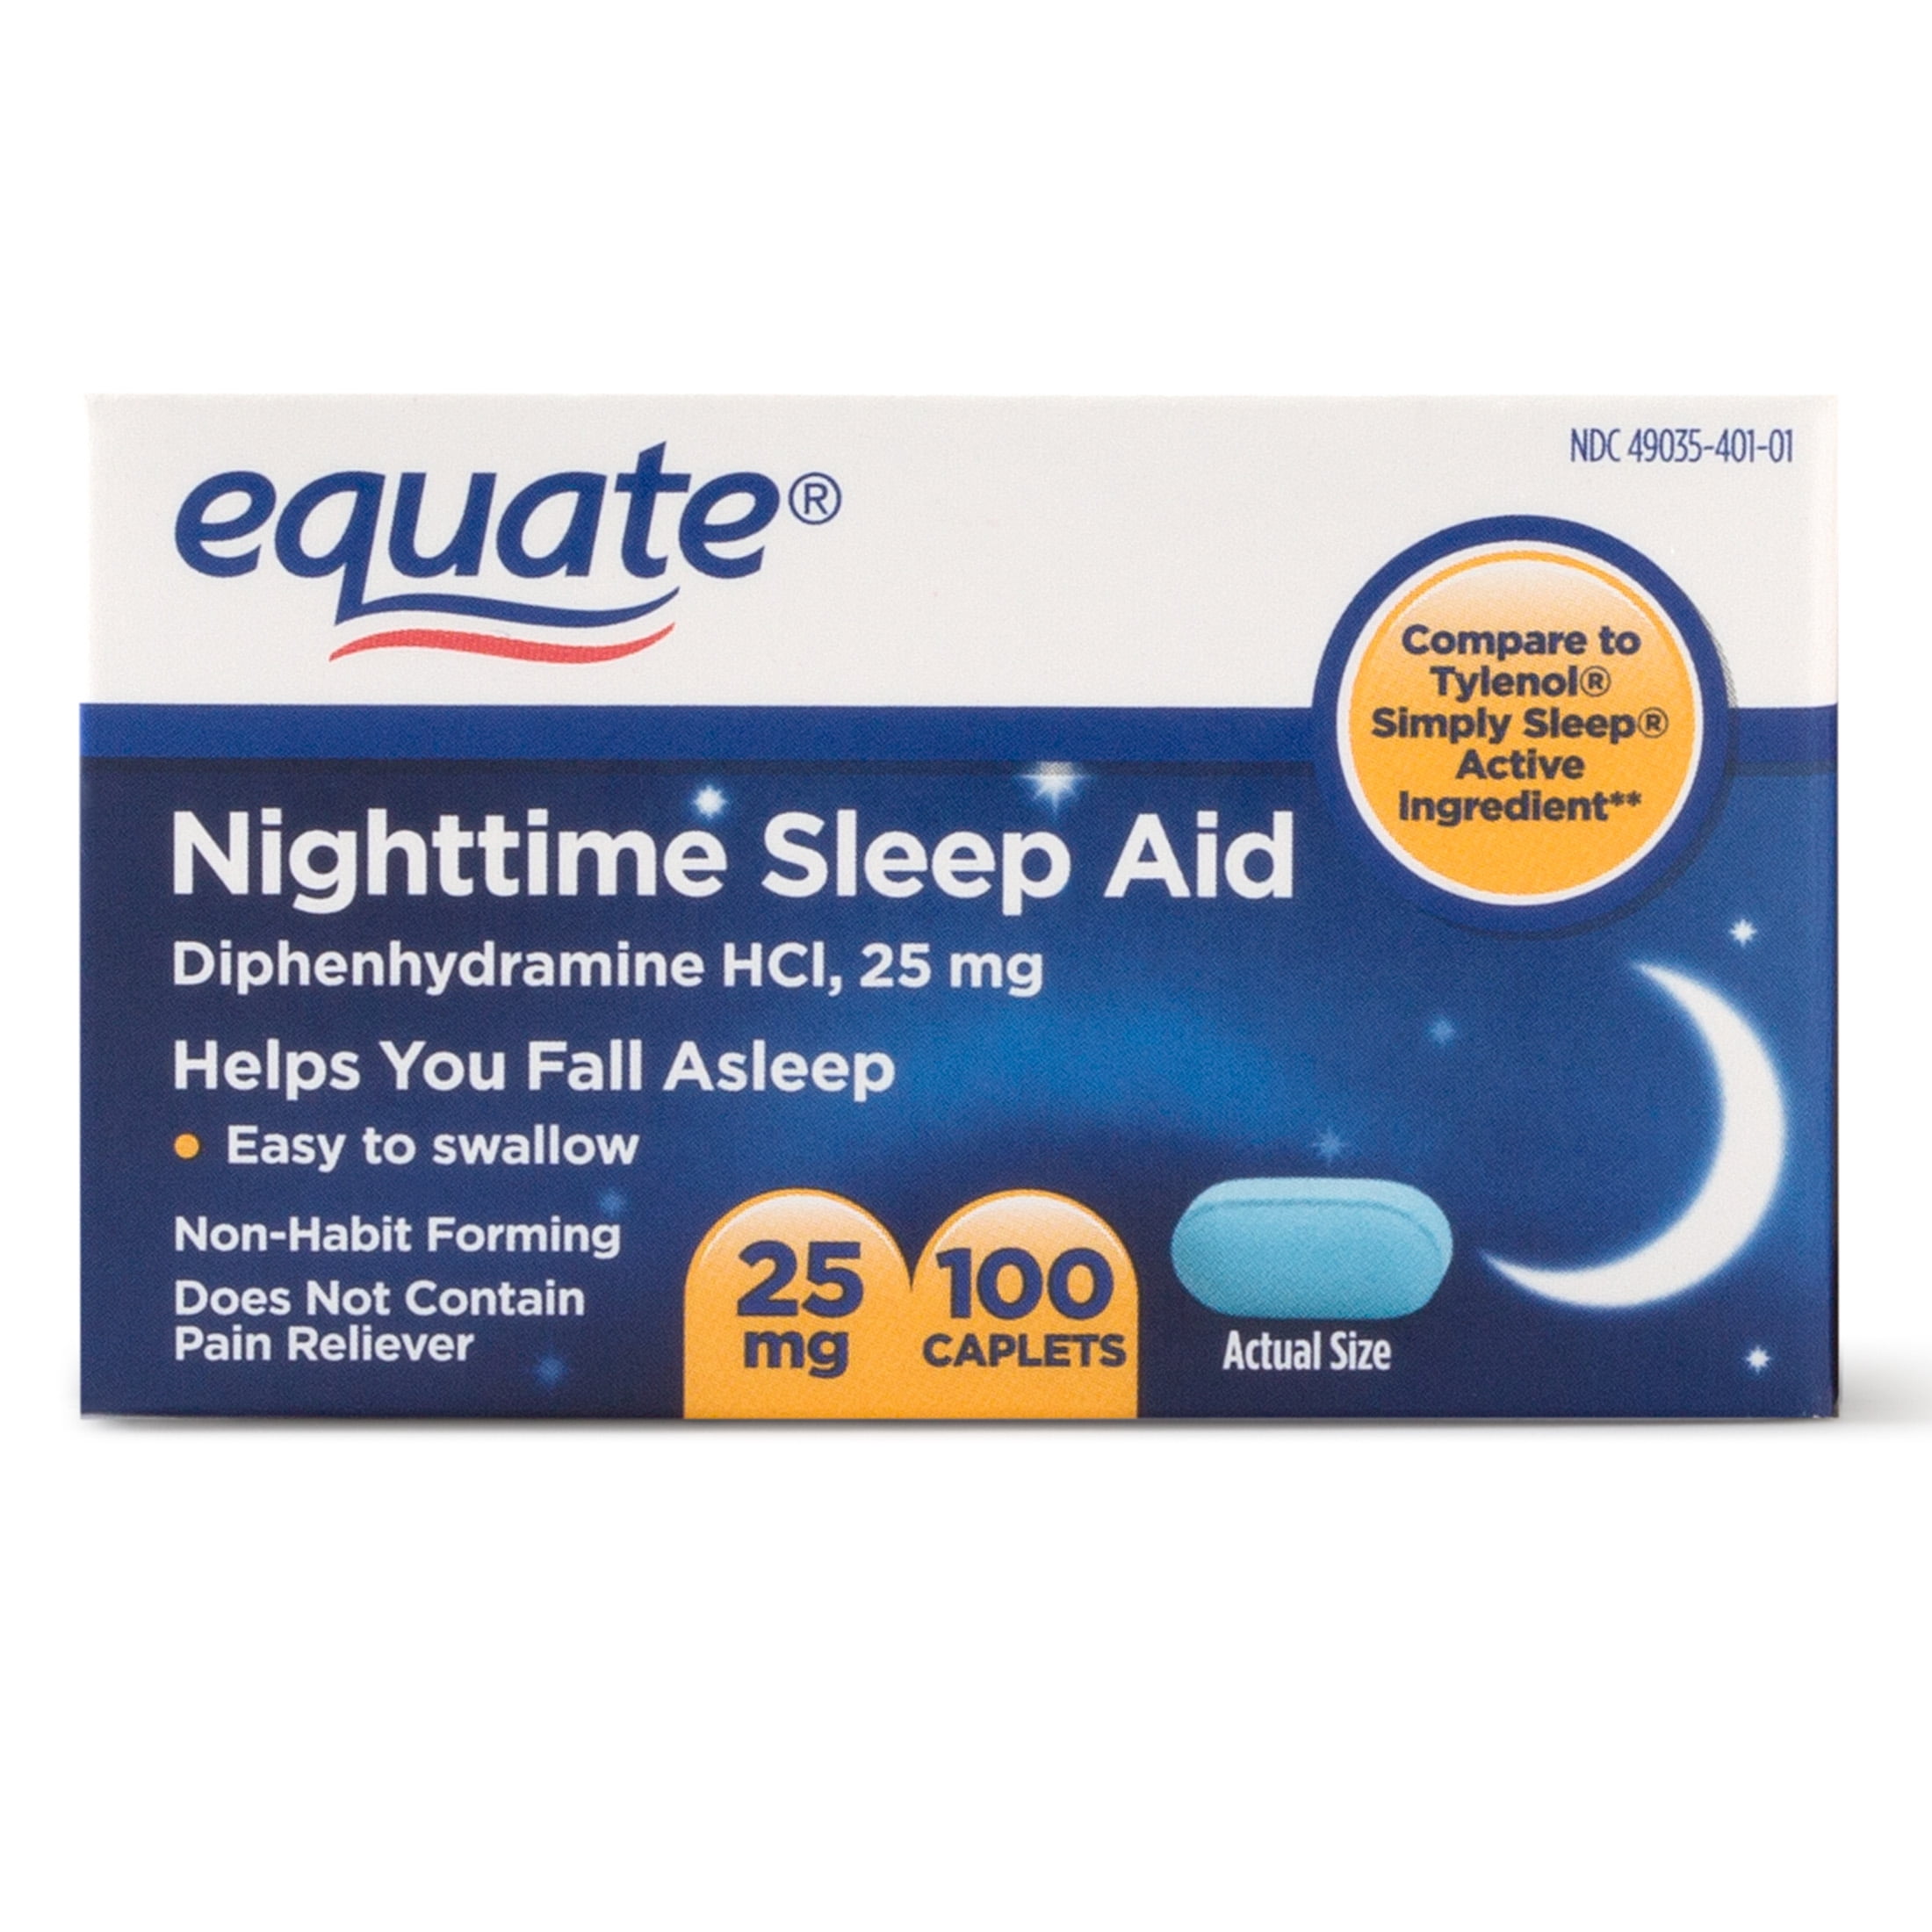 equate nighttime sleep aid diphenhydramine hcl caplets, 25 mg, 100